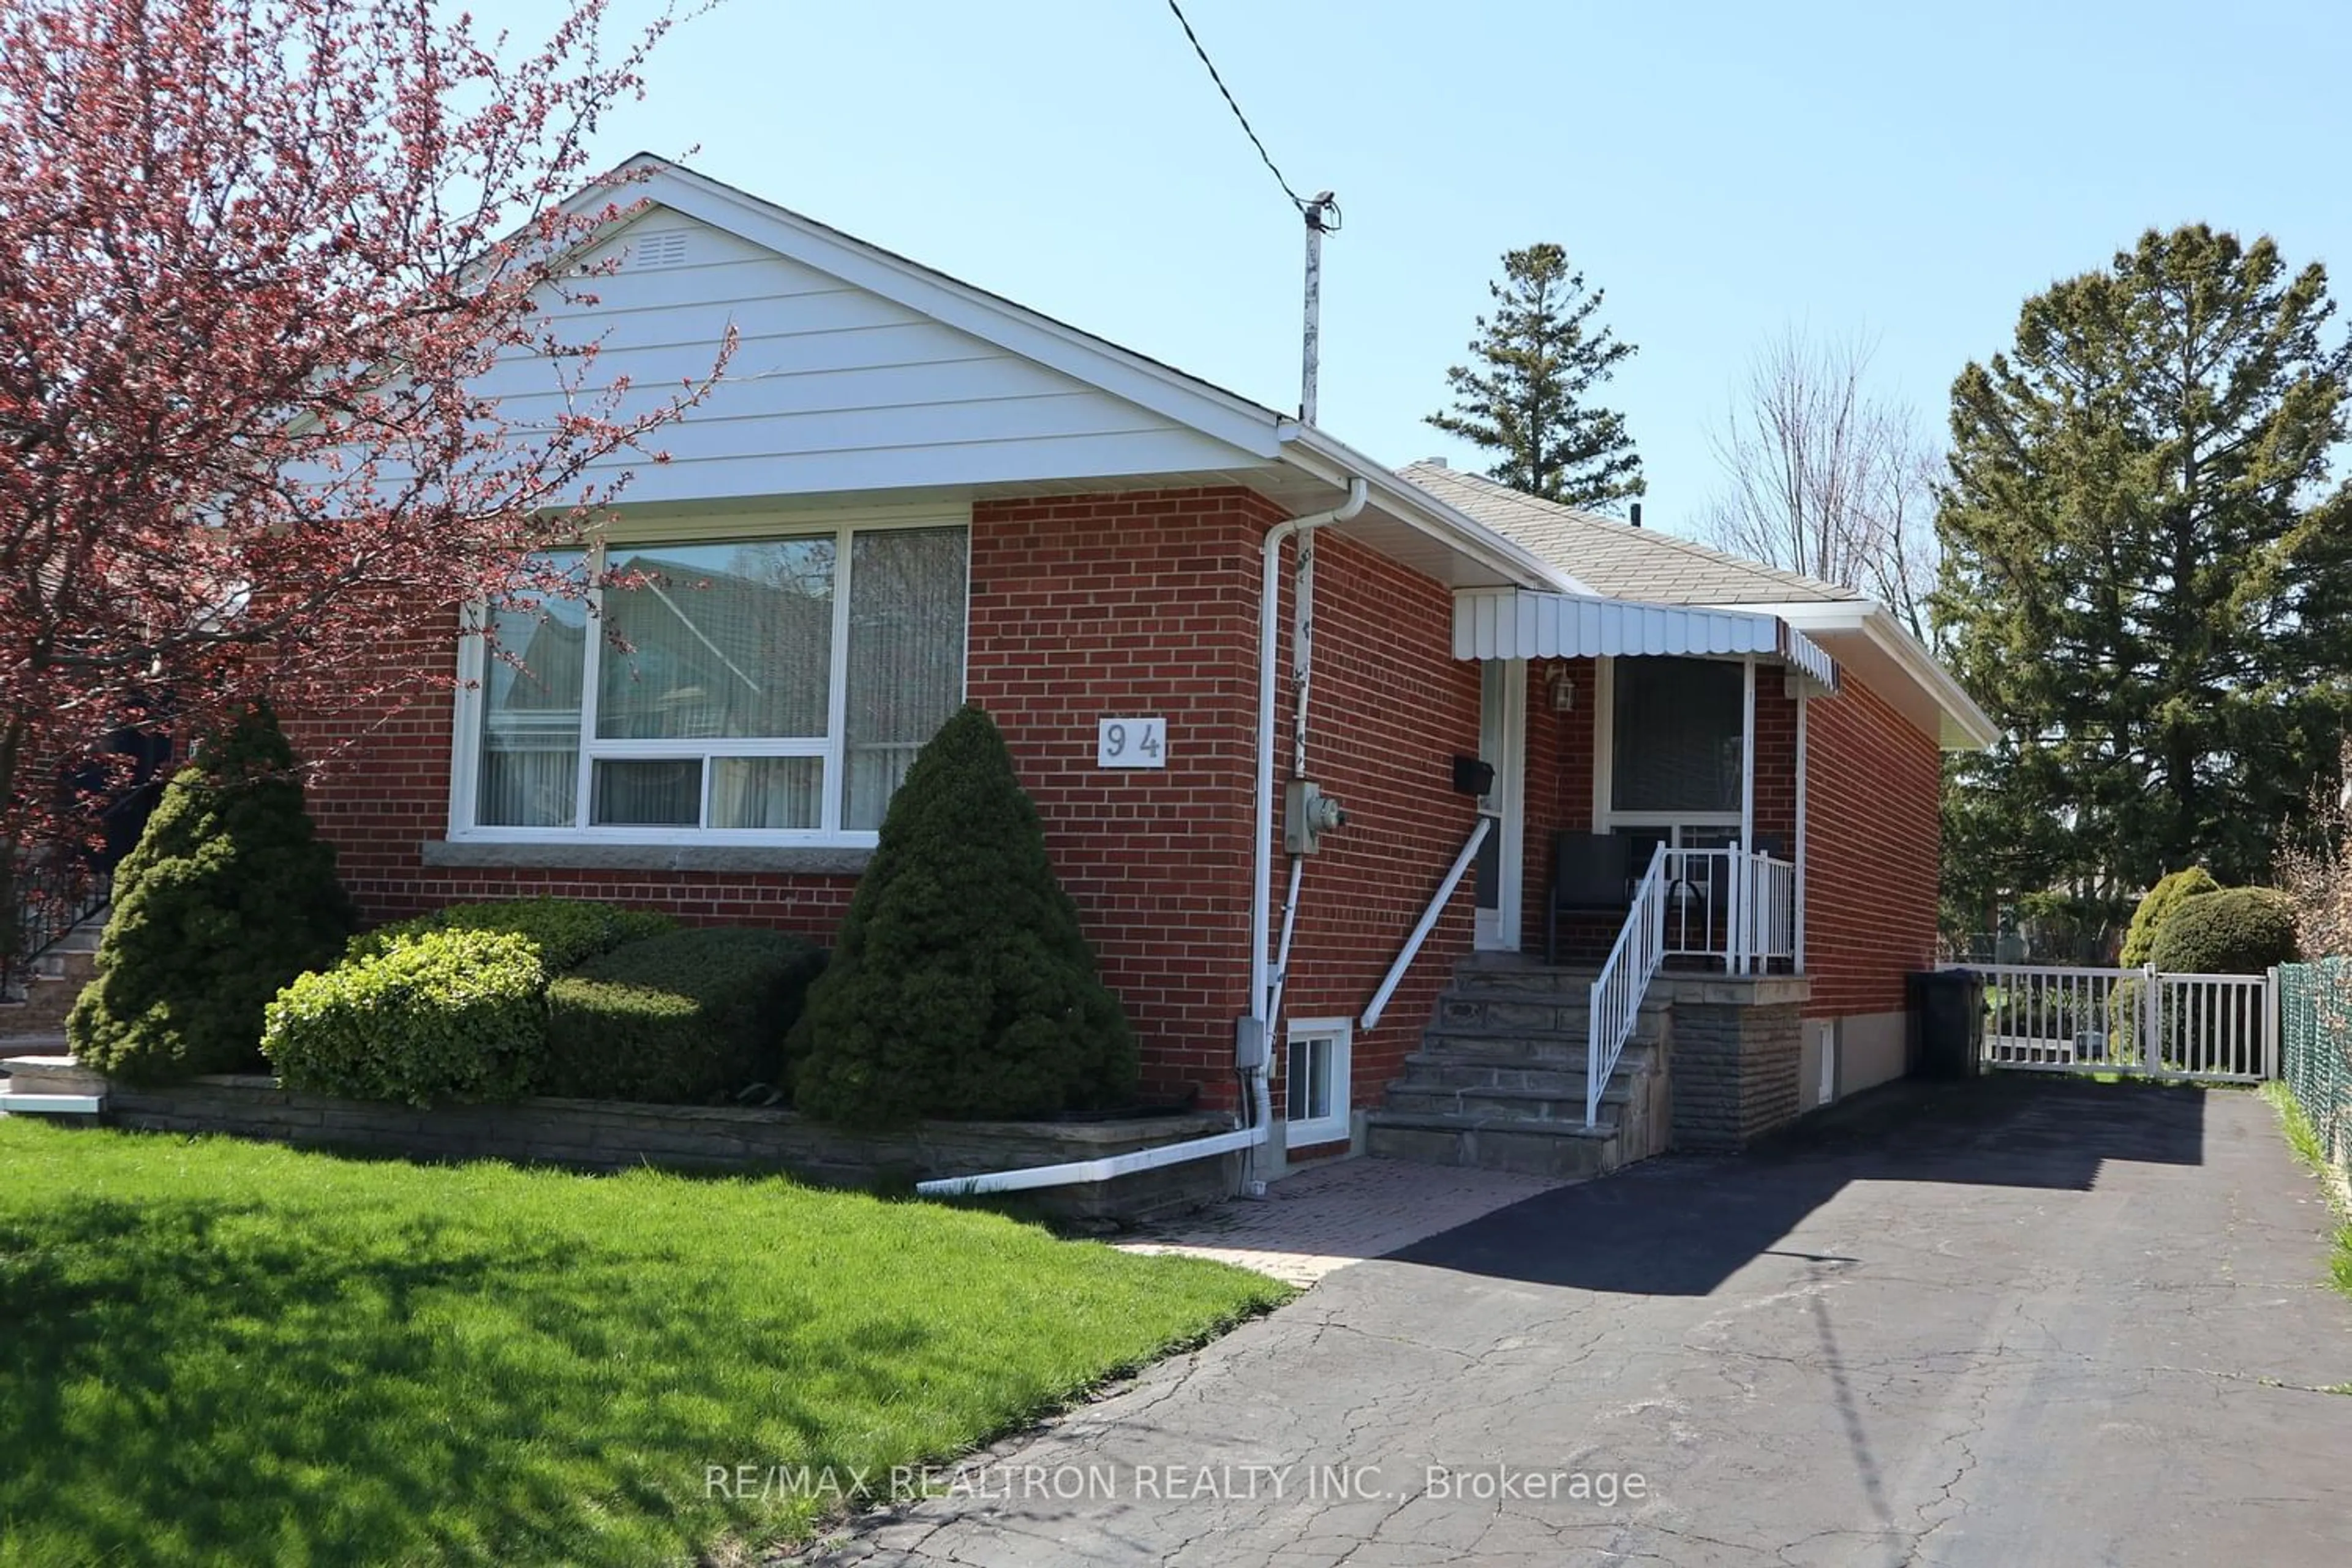 Home with brick exterior material for 94 Dewey Dr, Toronto Ontario M1R 3K9